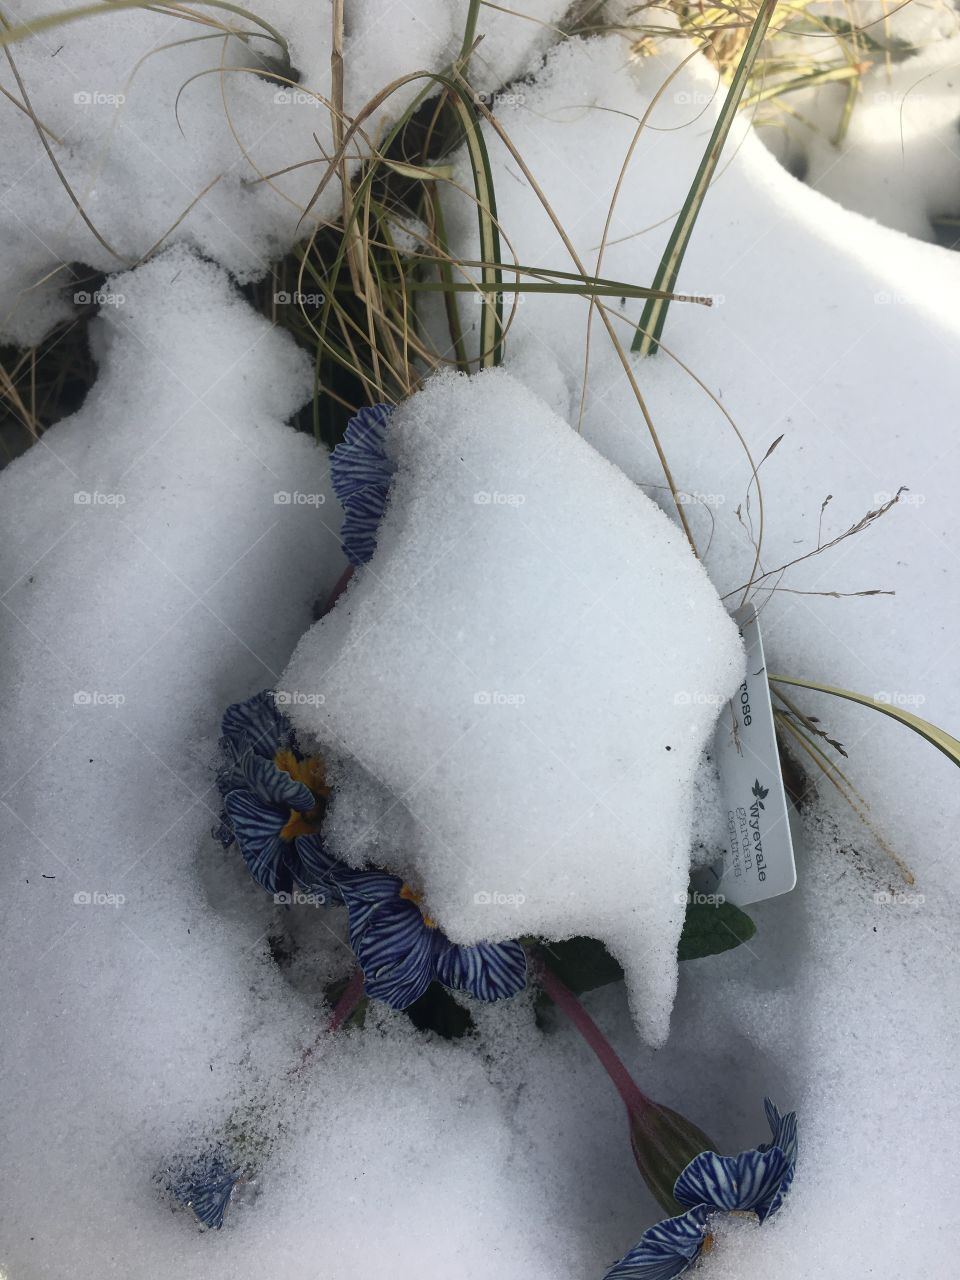 Denim primroses peeking out of the snow